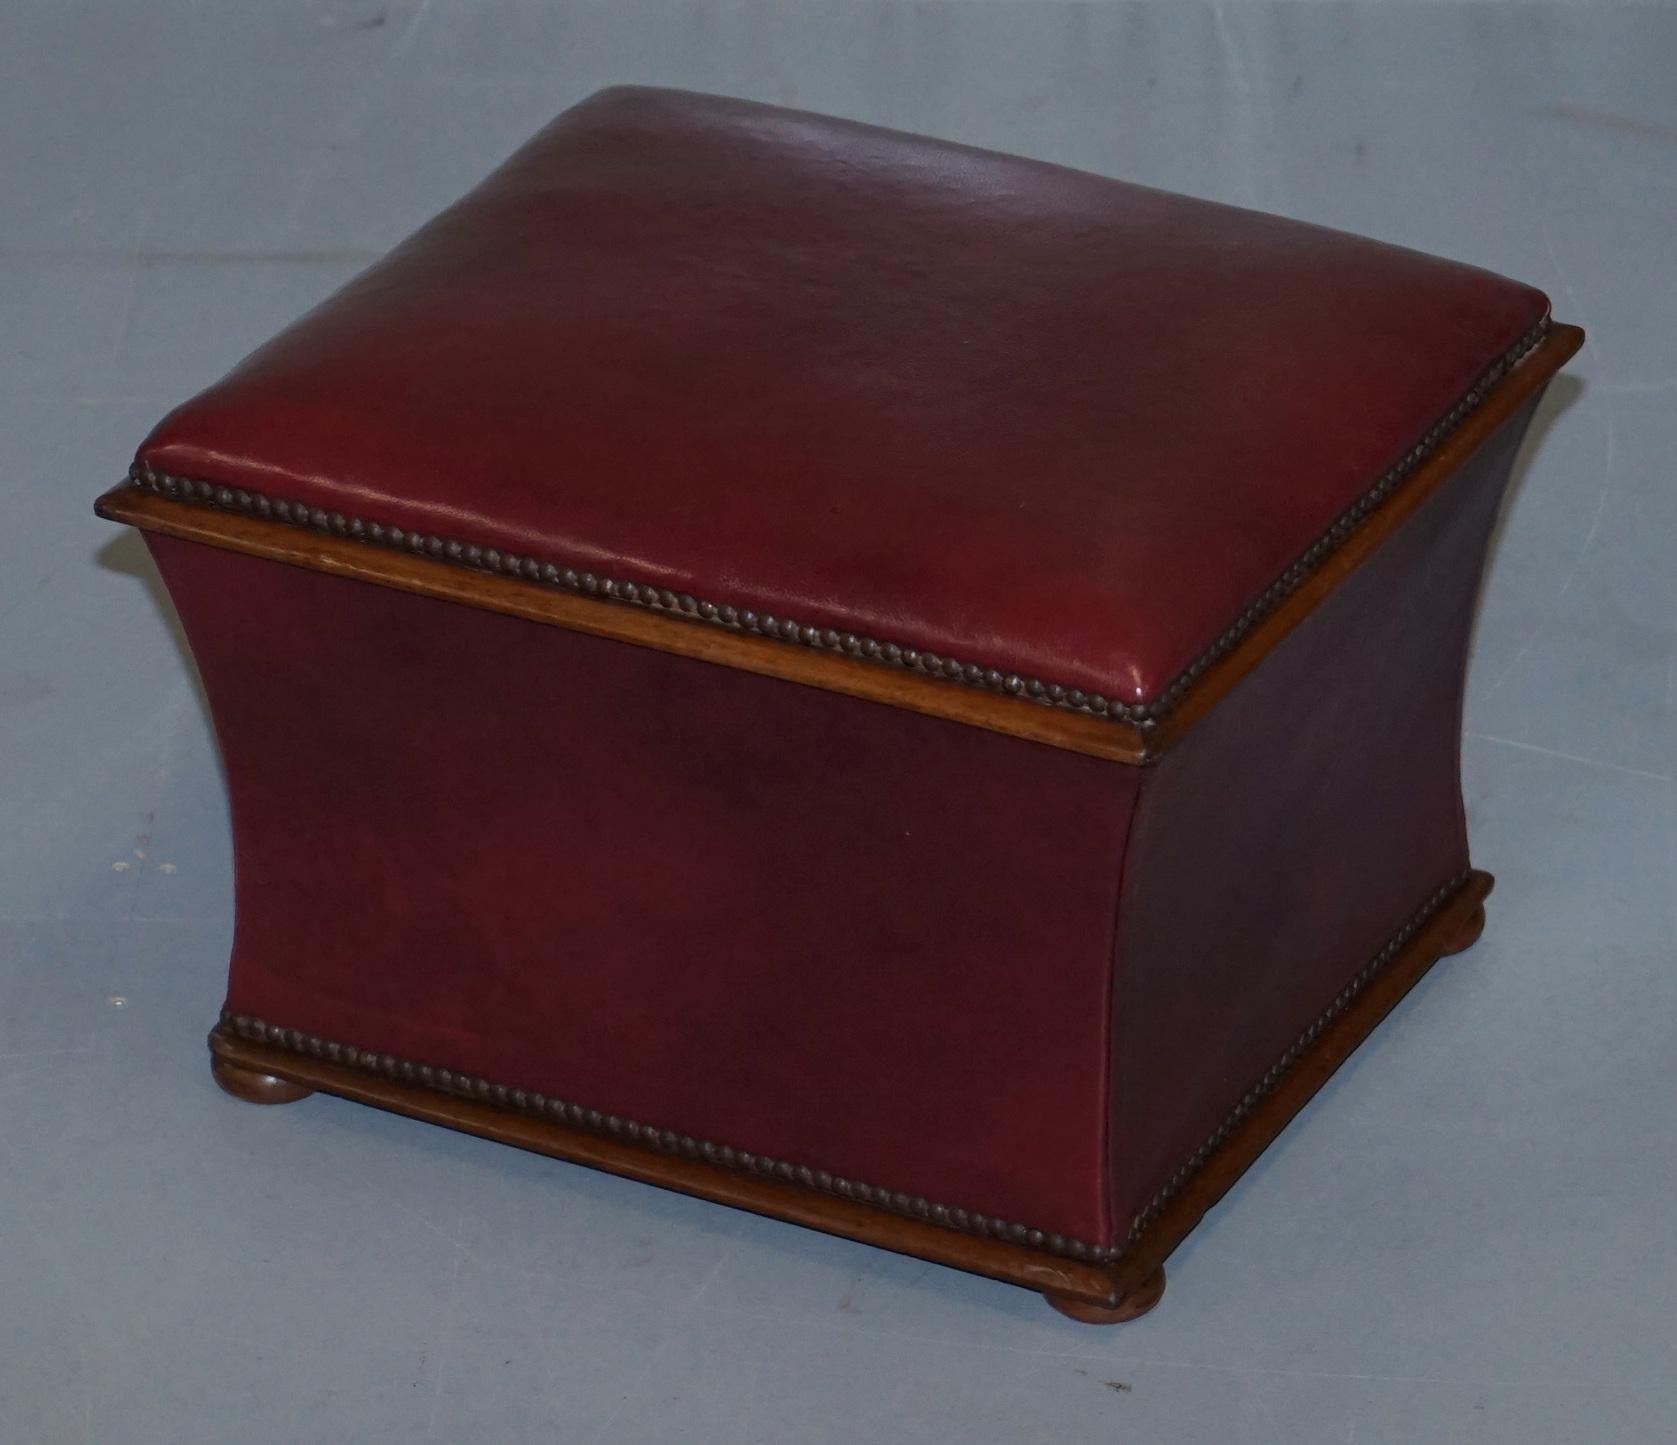 Hand-Crafted Stunning Victorian circa 1860 Oxblood Leather & English Walnut Footstool Ottoman